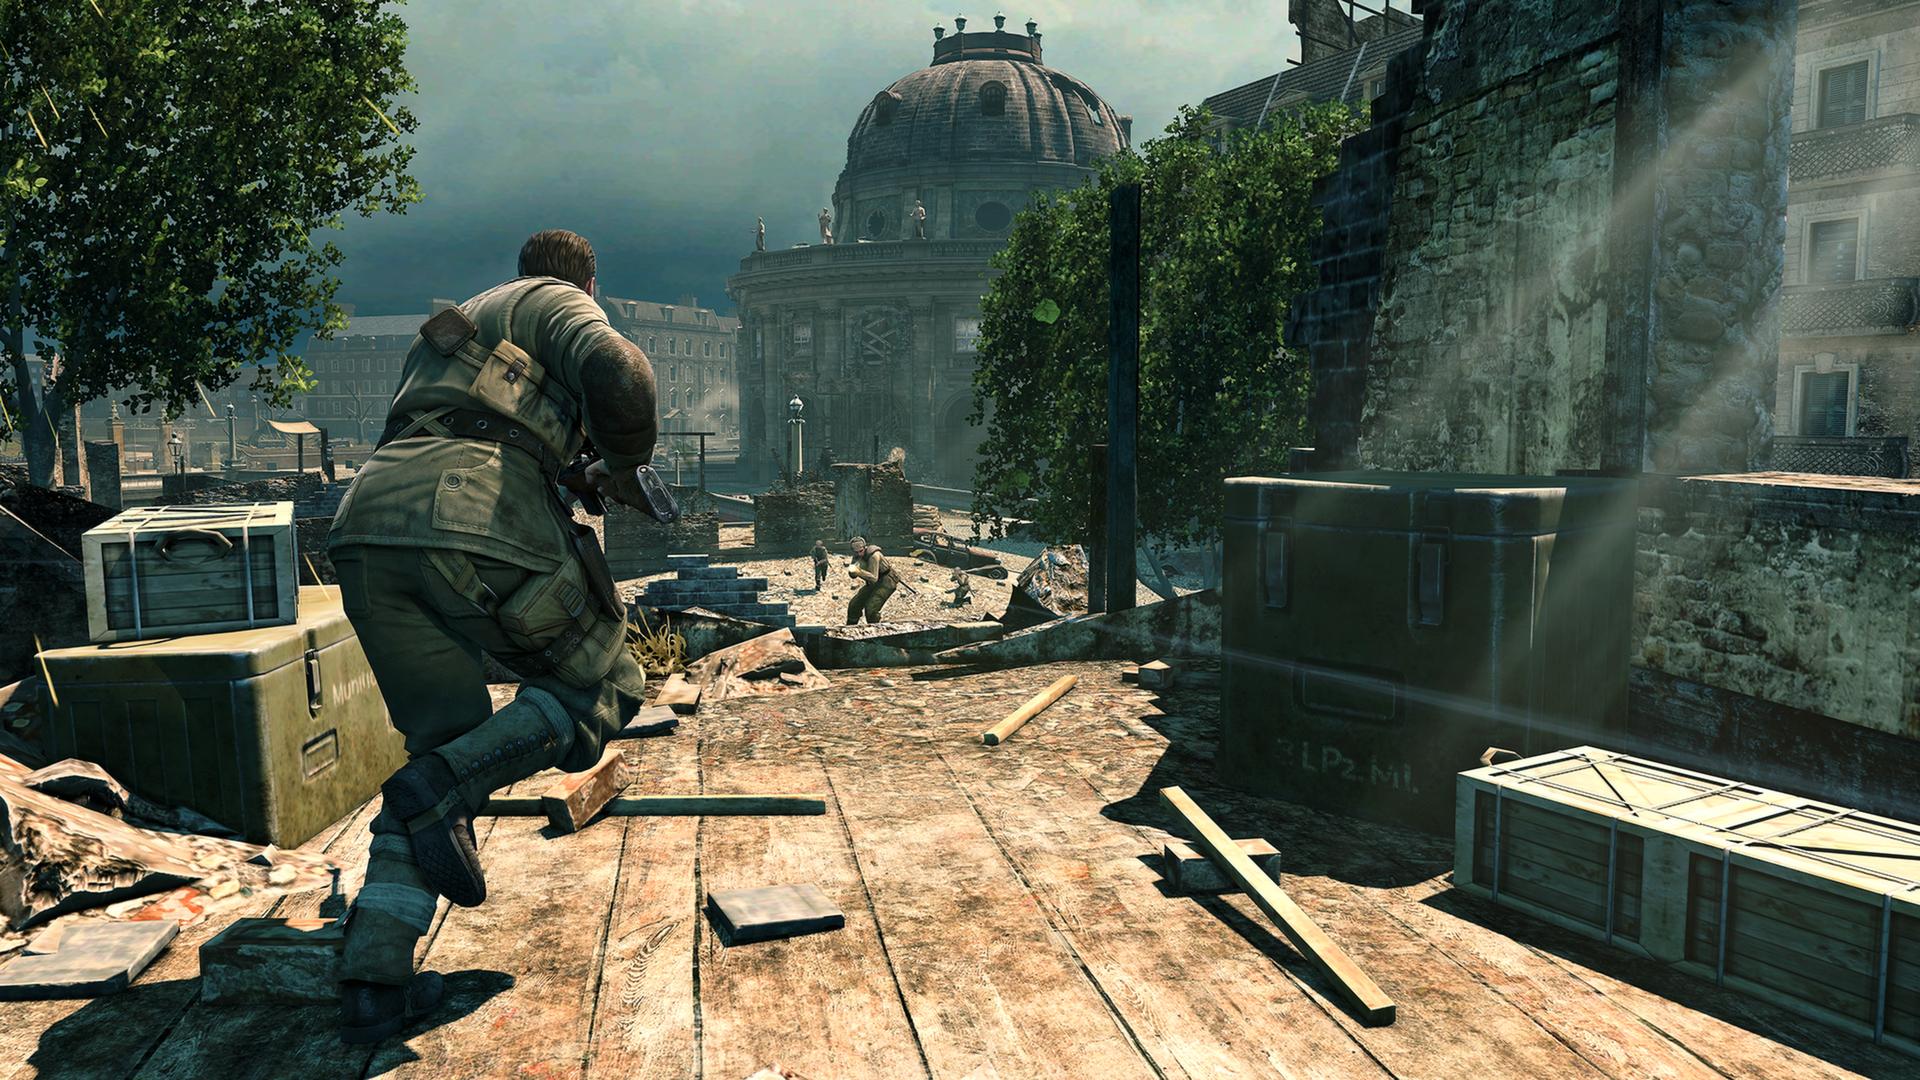 Screenshot №10 from game Sniper Elite V2